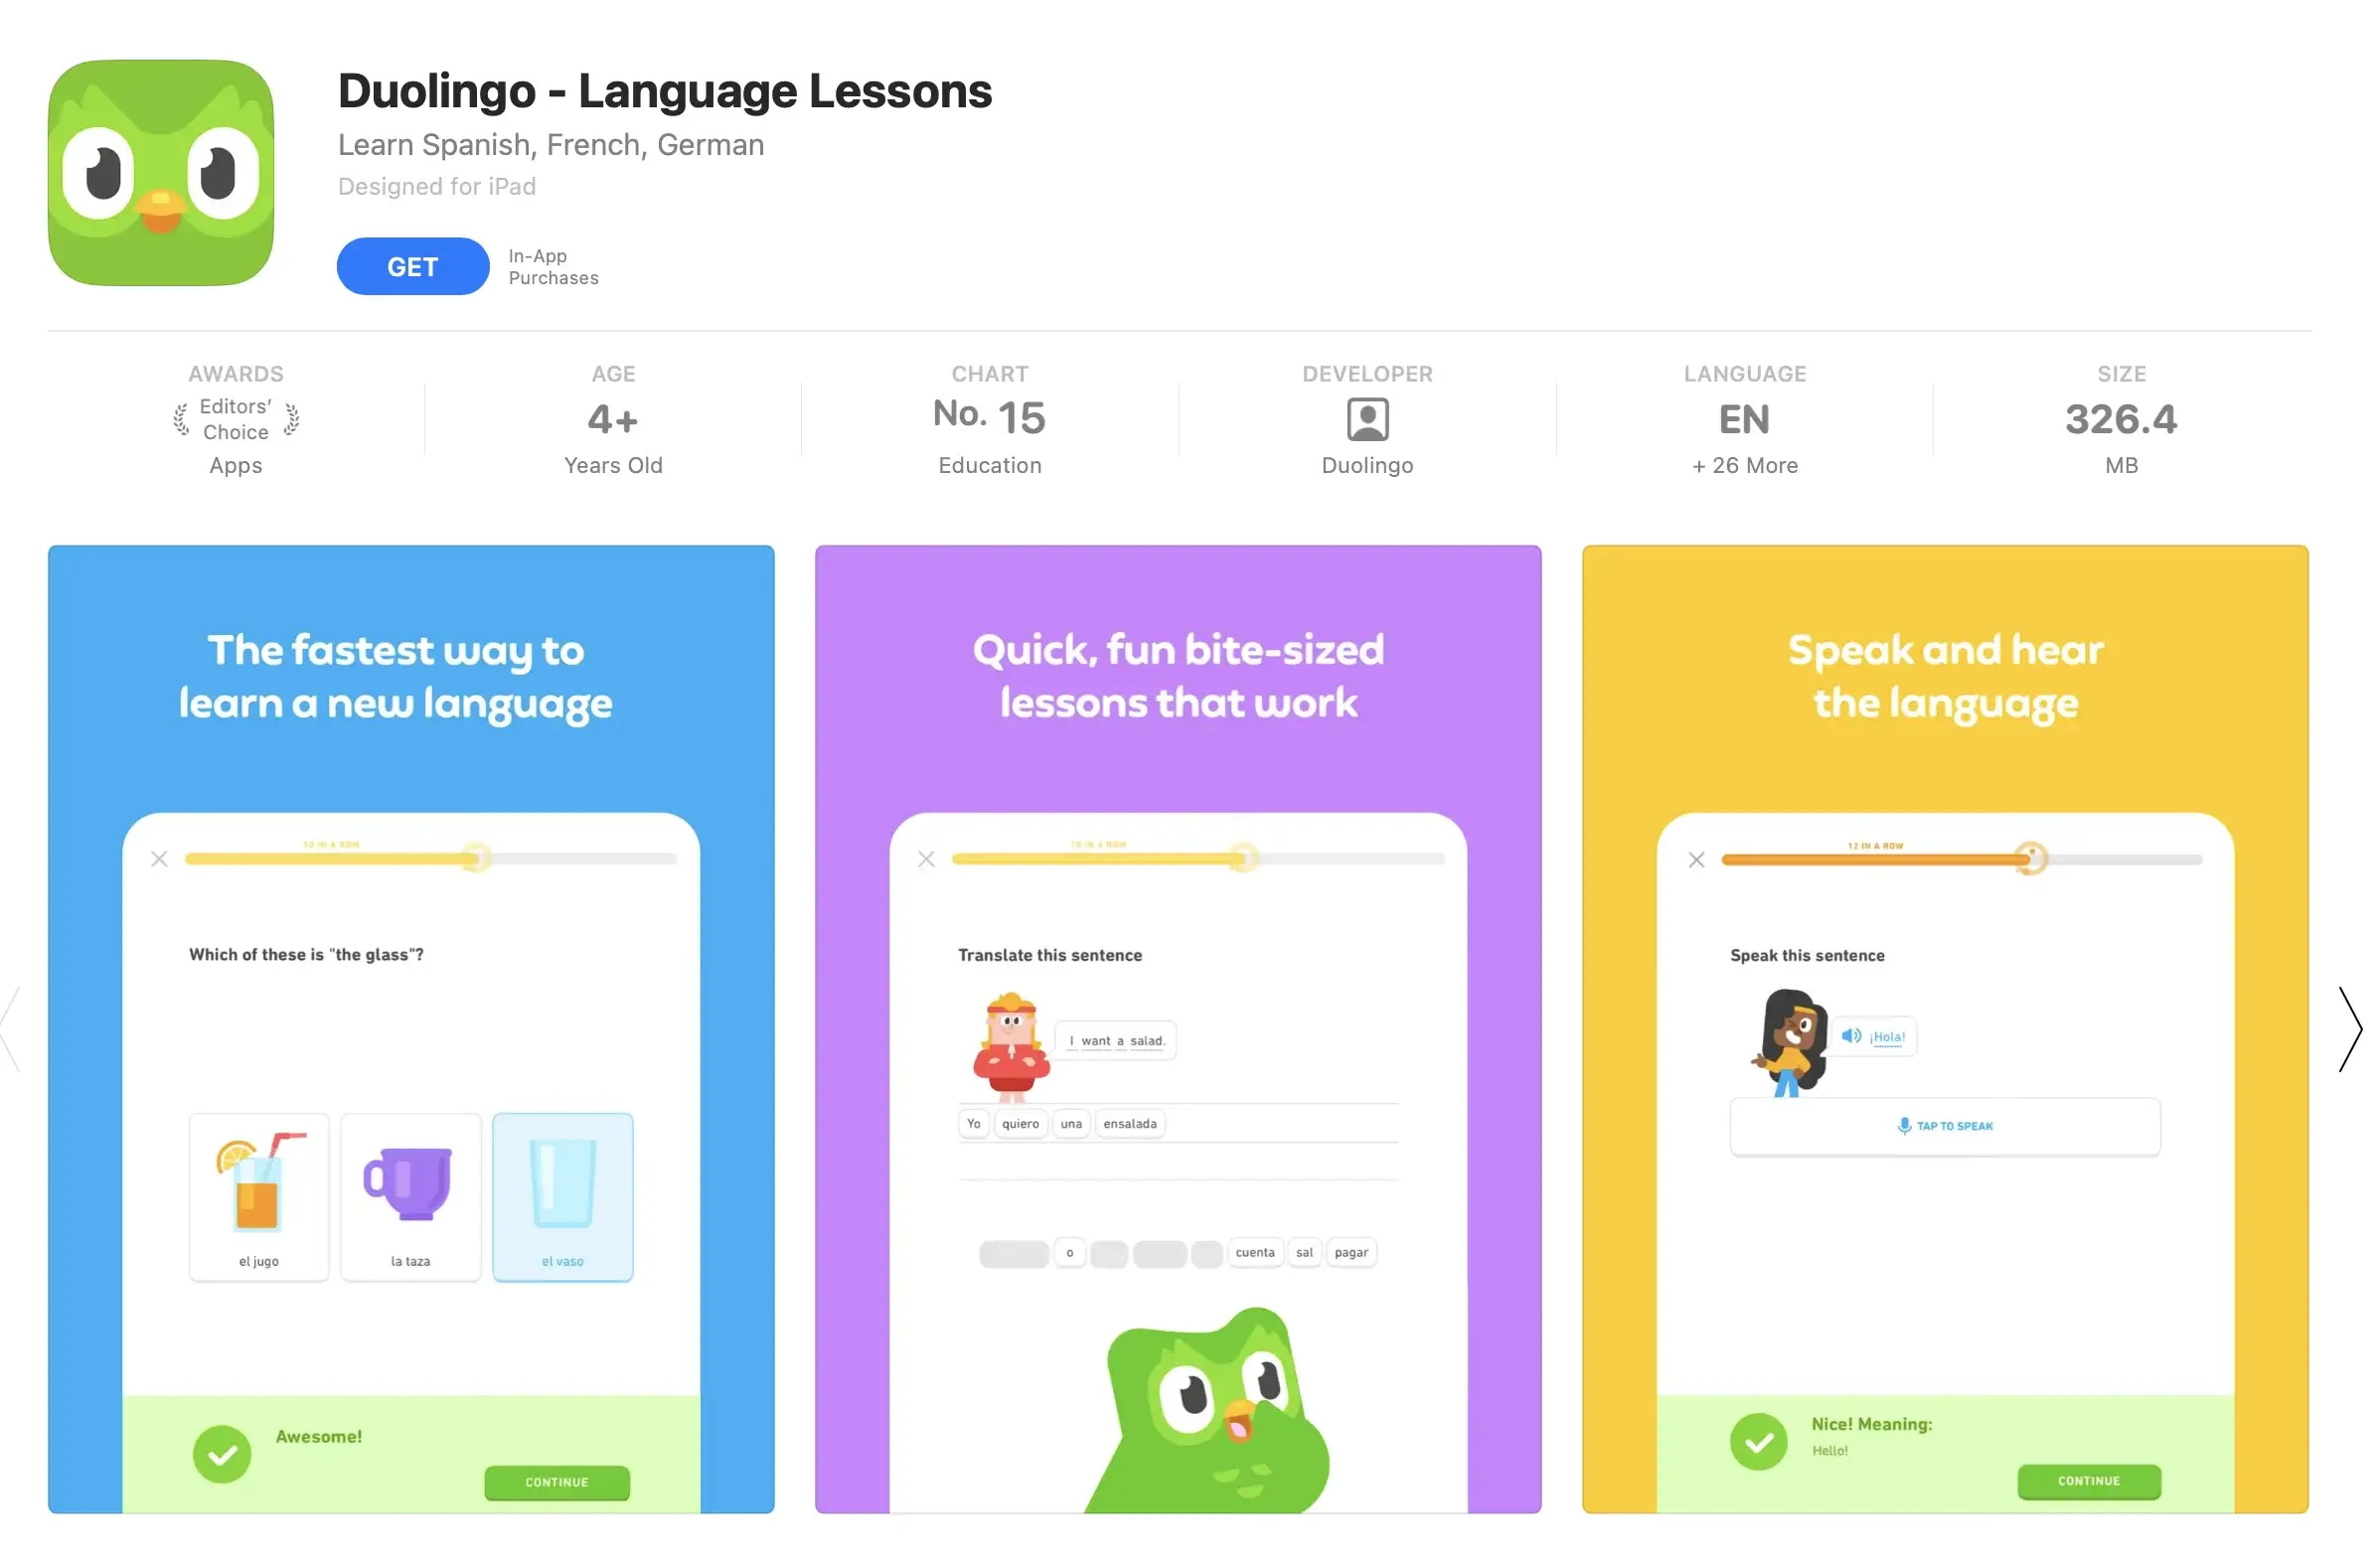 5. Duolingo - Your AI-powered Teacher